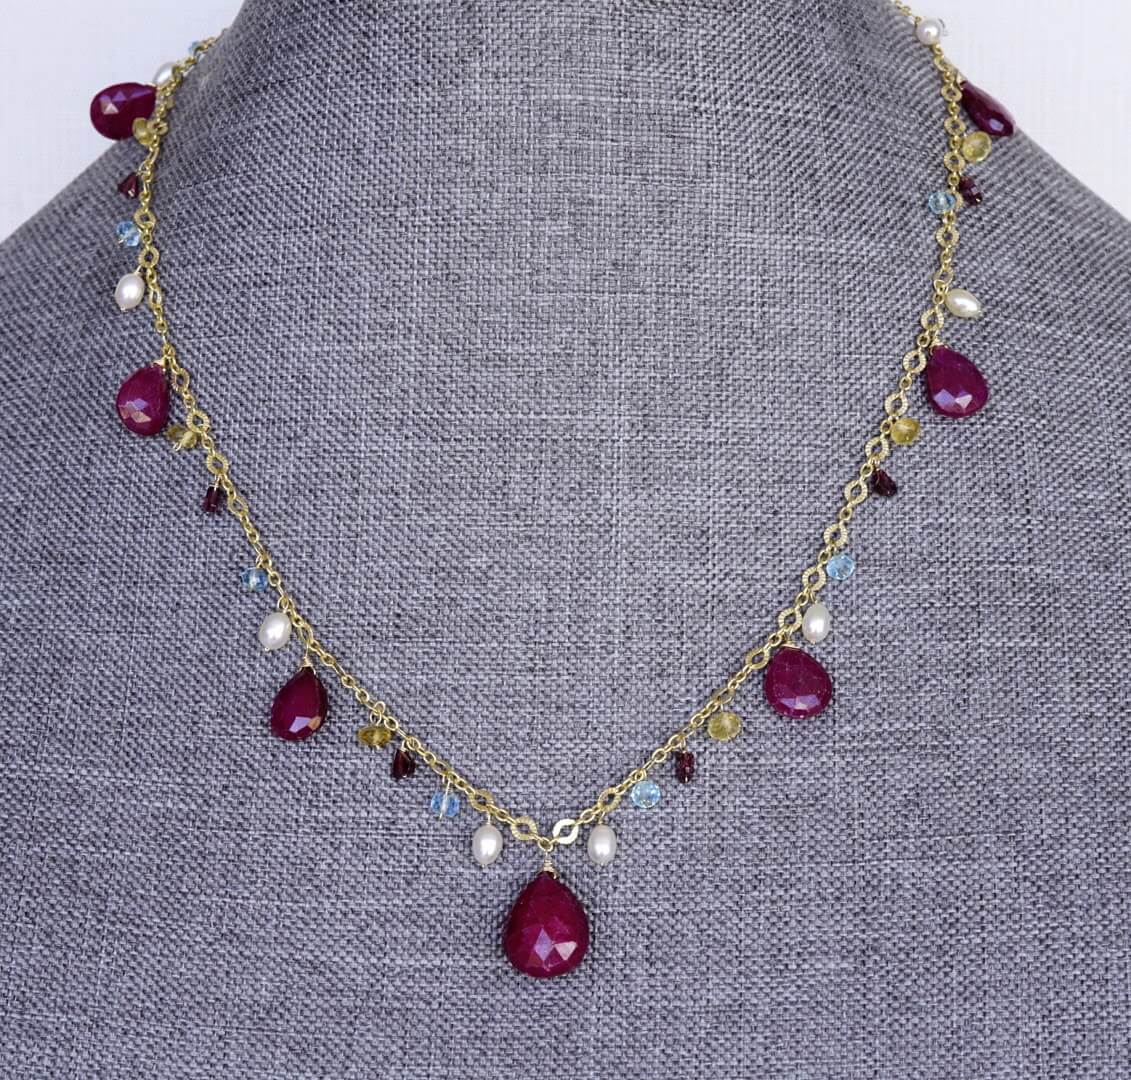 Ruby, Pearl, Aquamarine and Citrine Necklace - healing gemstone jewelry